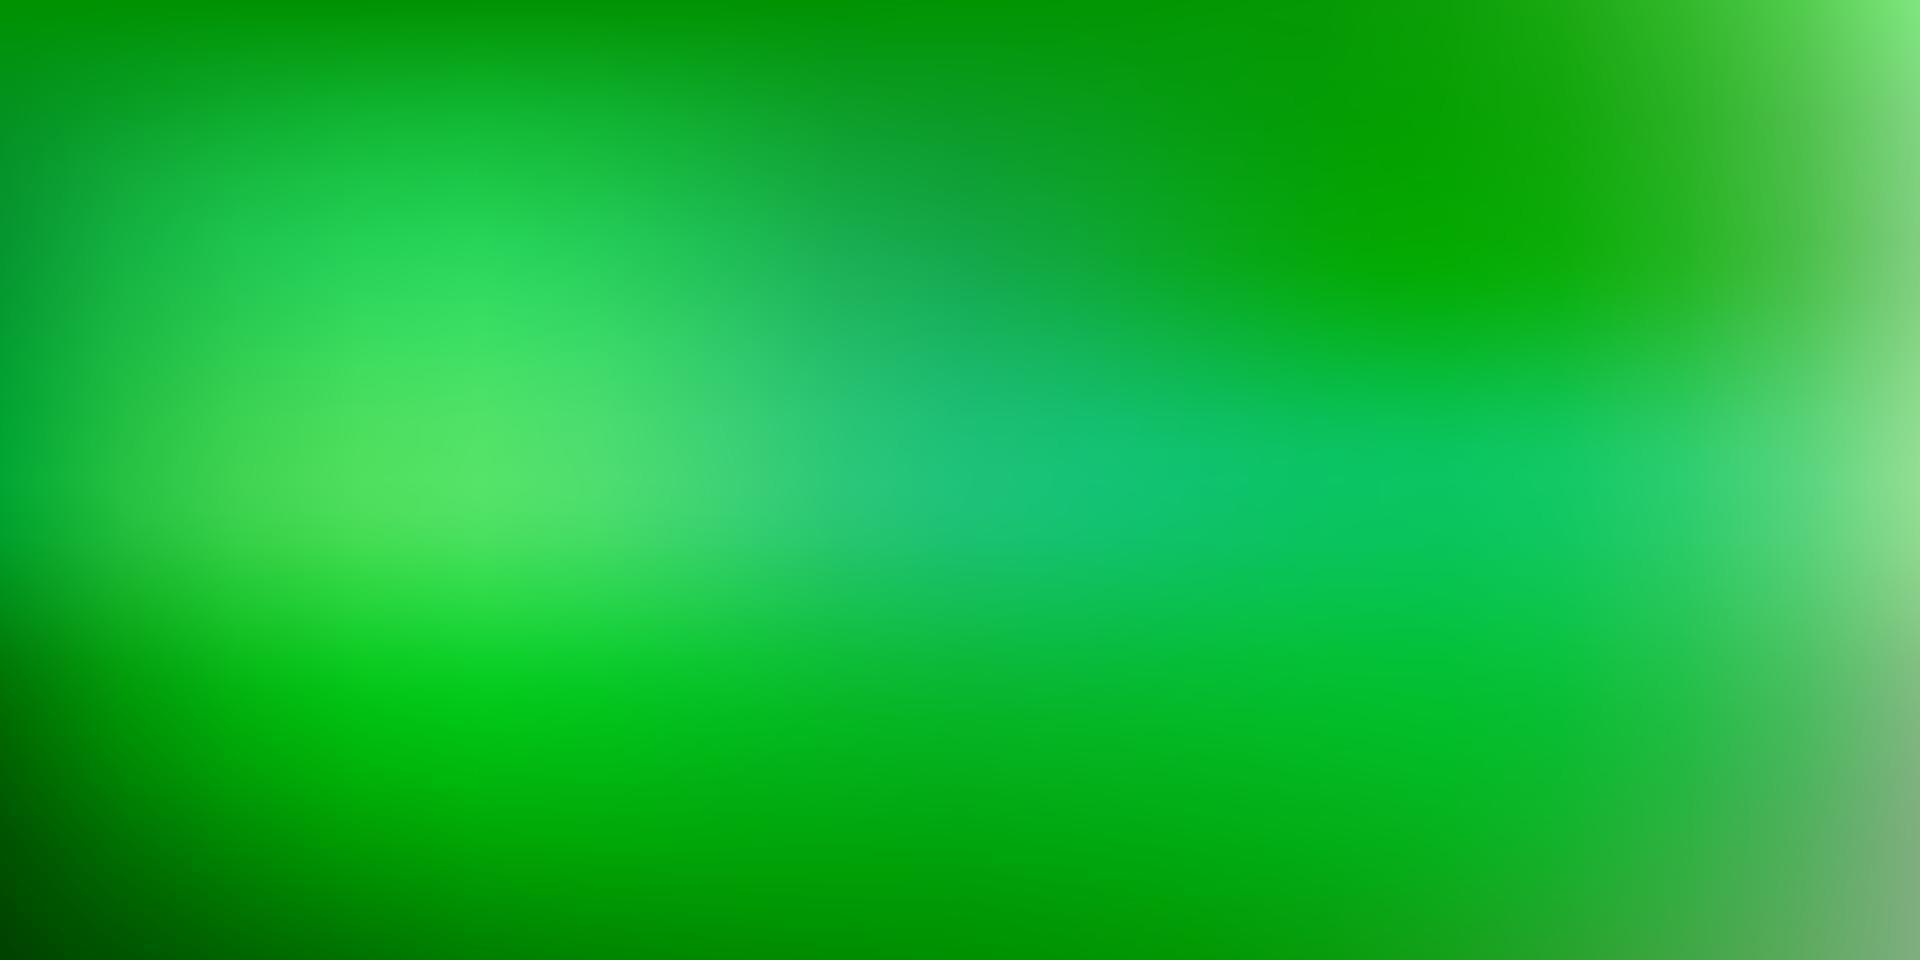 sfondo sfocato sfumato vettoriale verde chiaro.